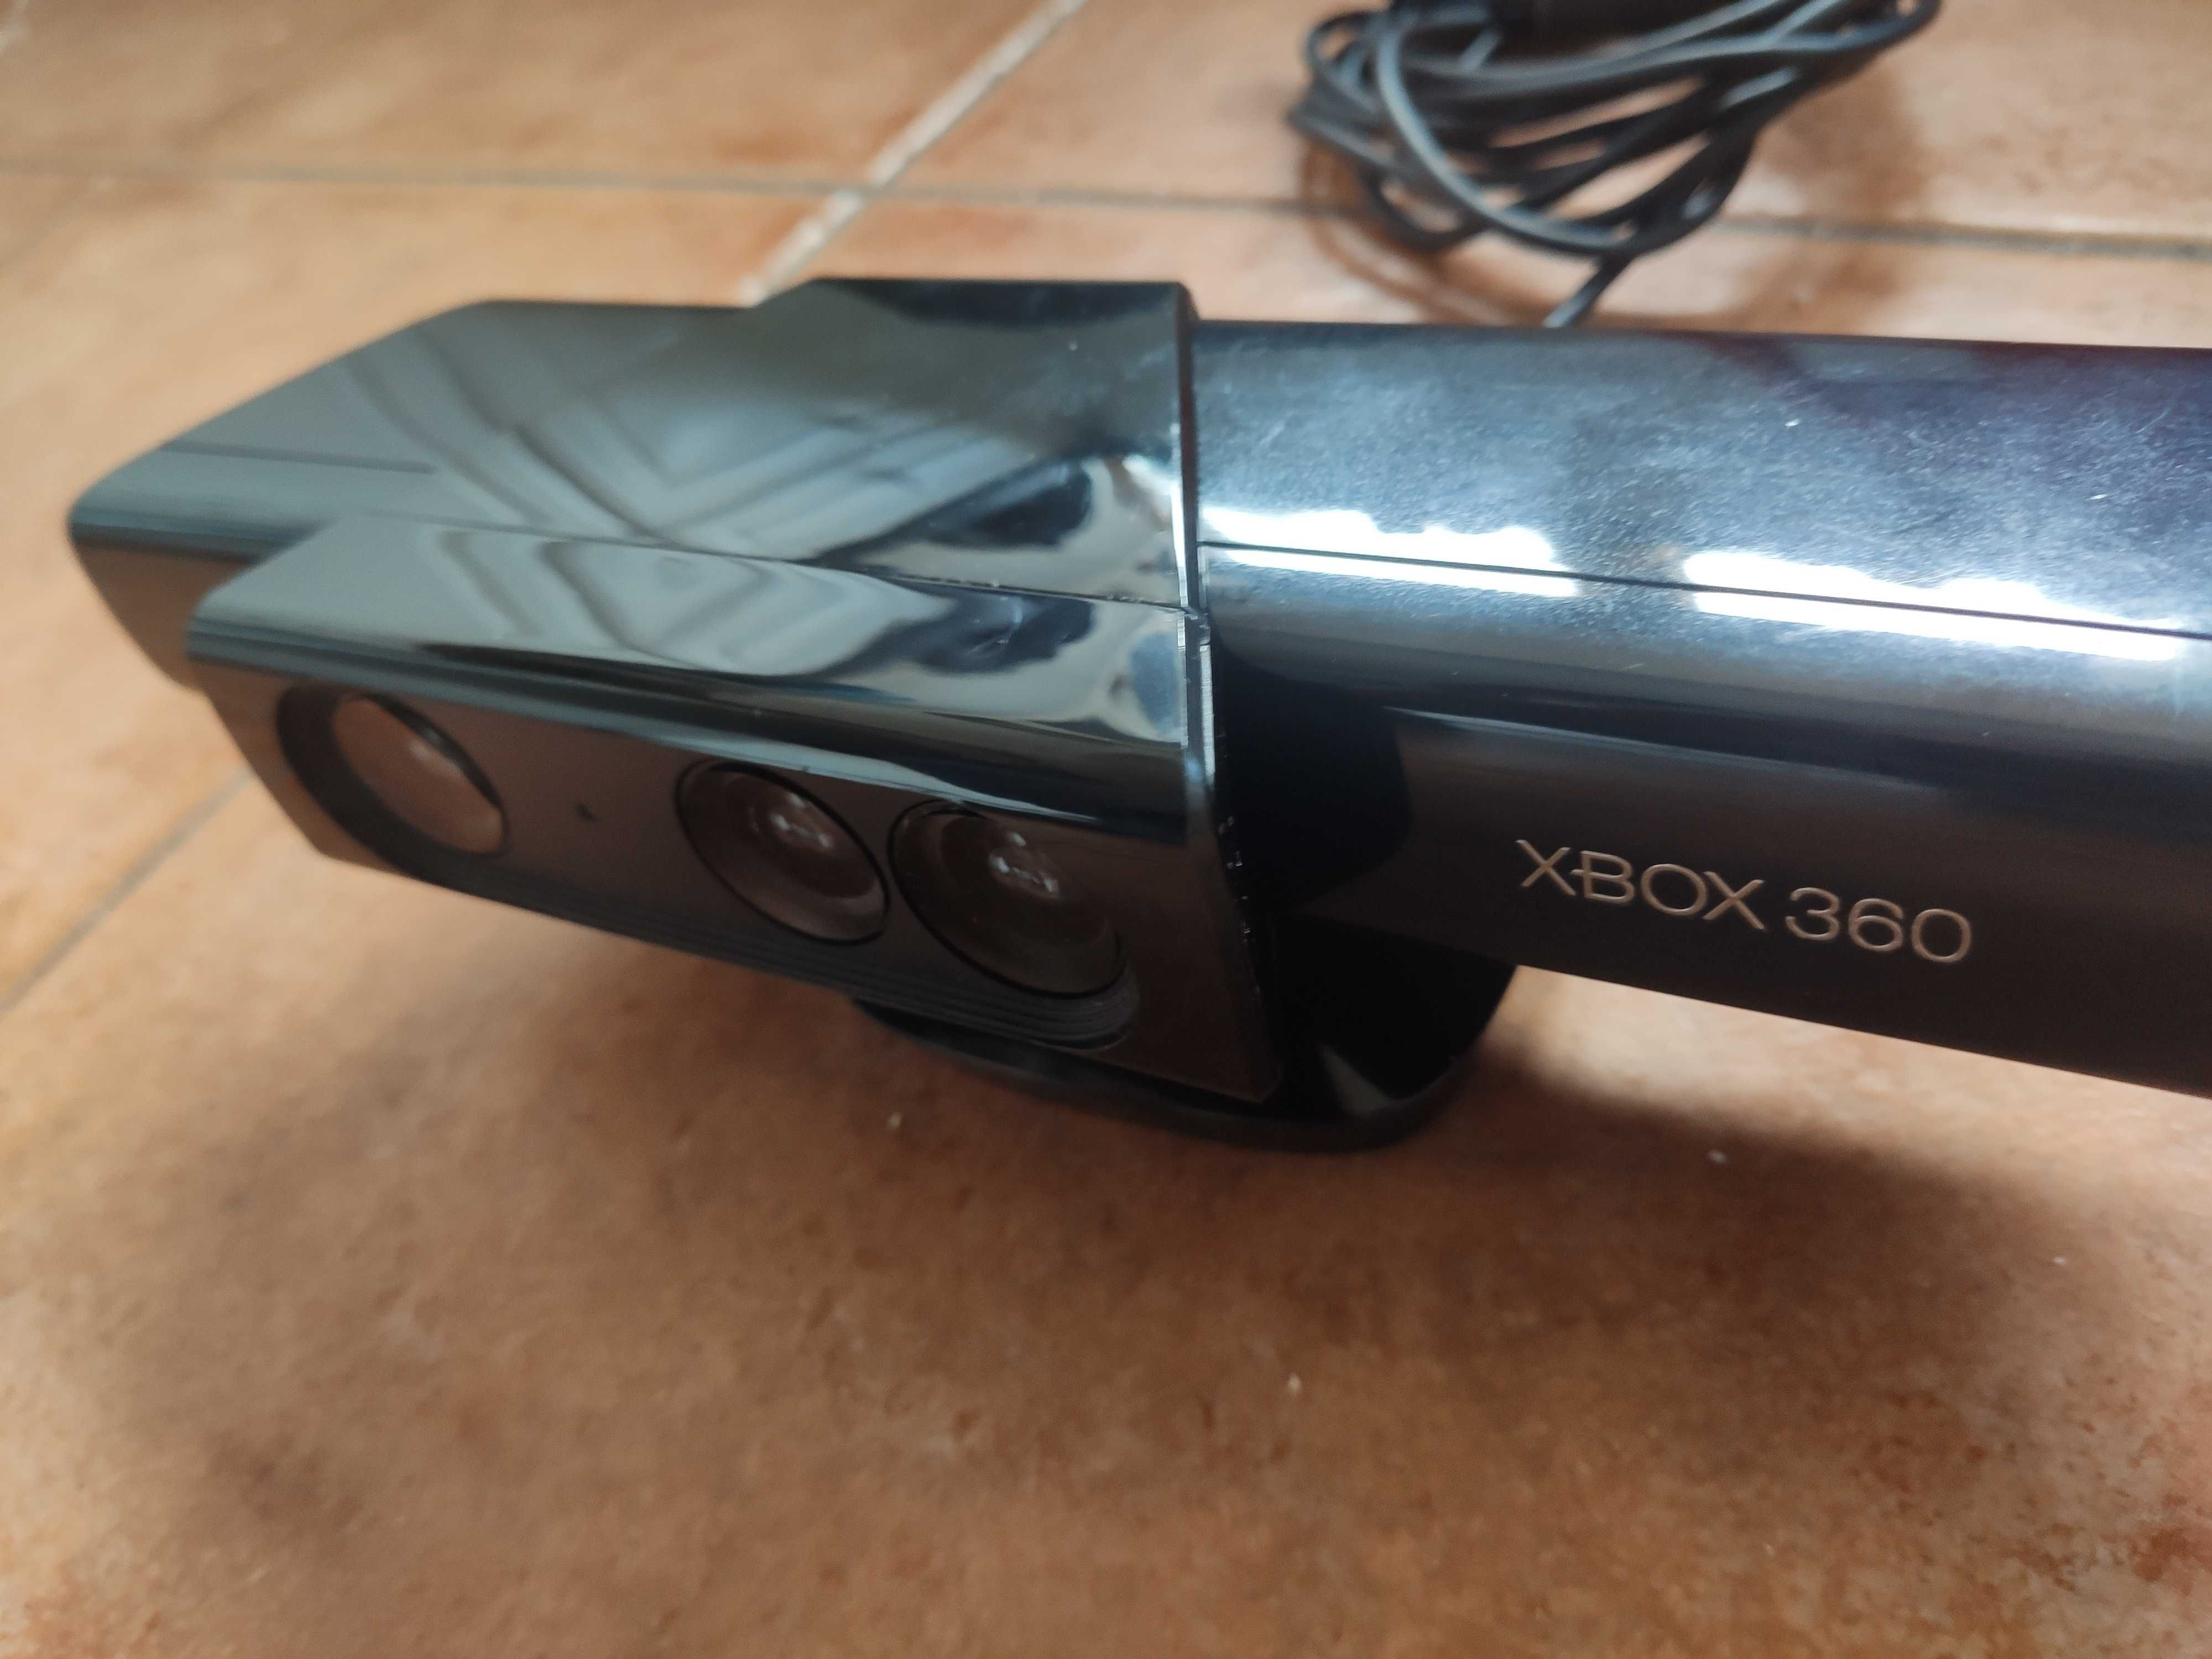 Xbox 360 E(Ultimo mod)+3 comandos+10 Jogos+Kinekt+Niko zoom+volante..